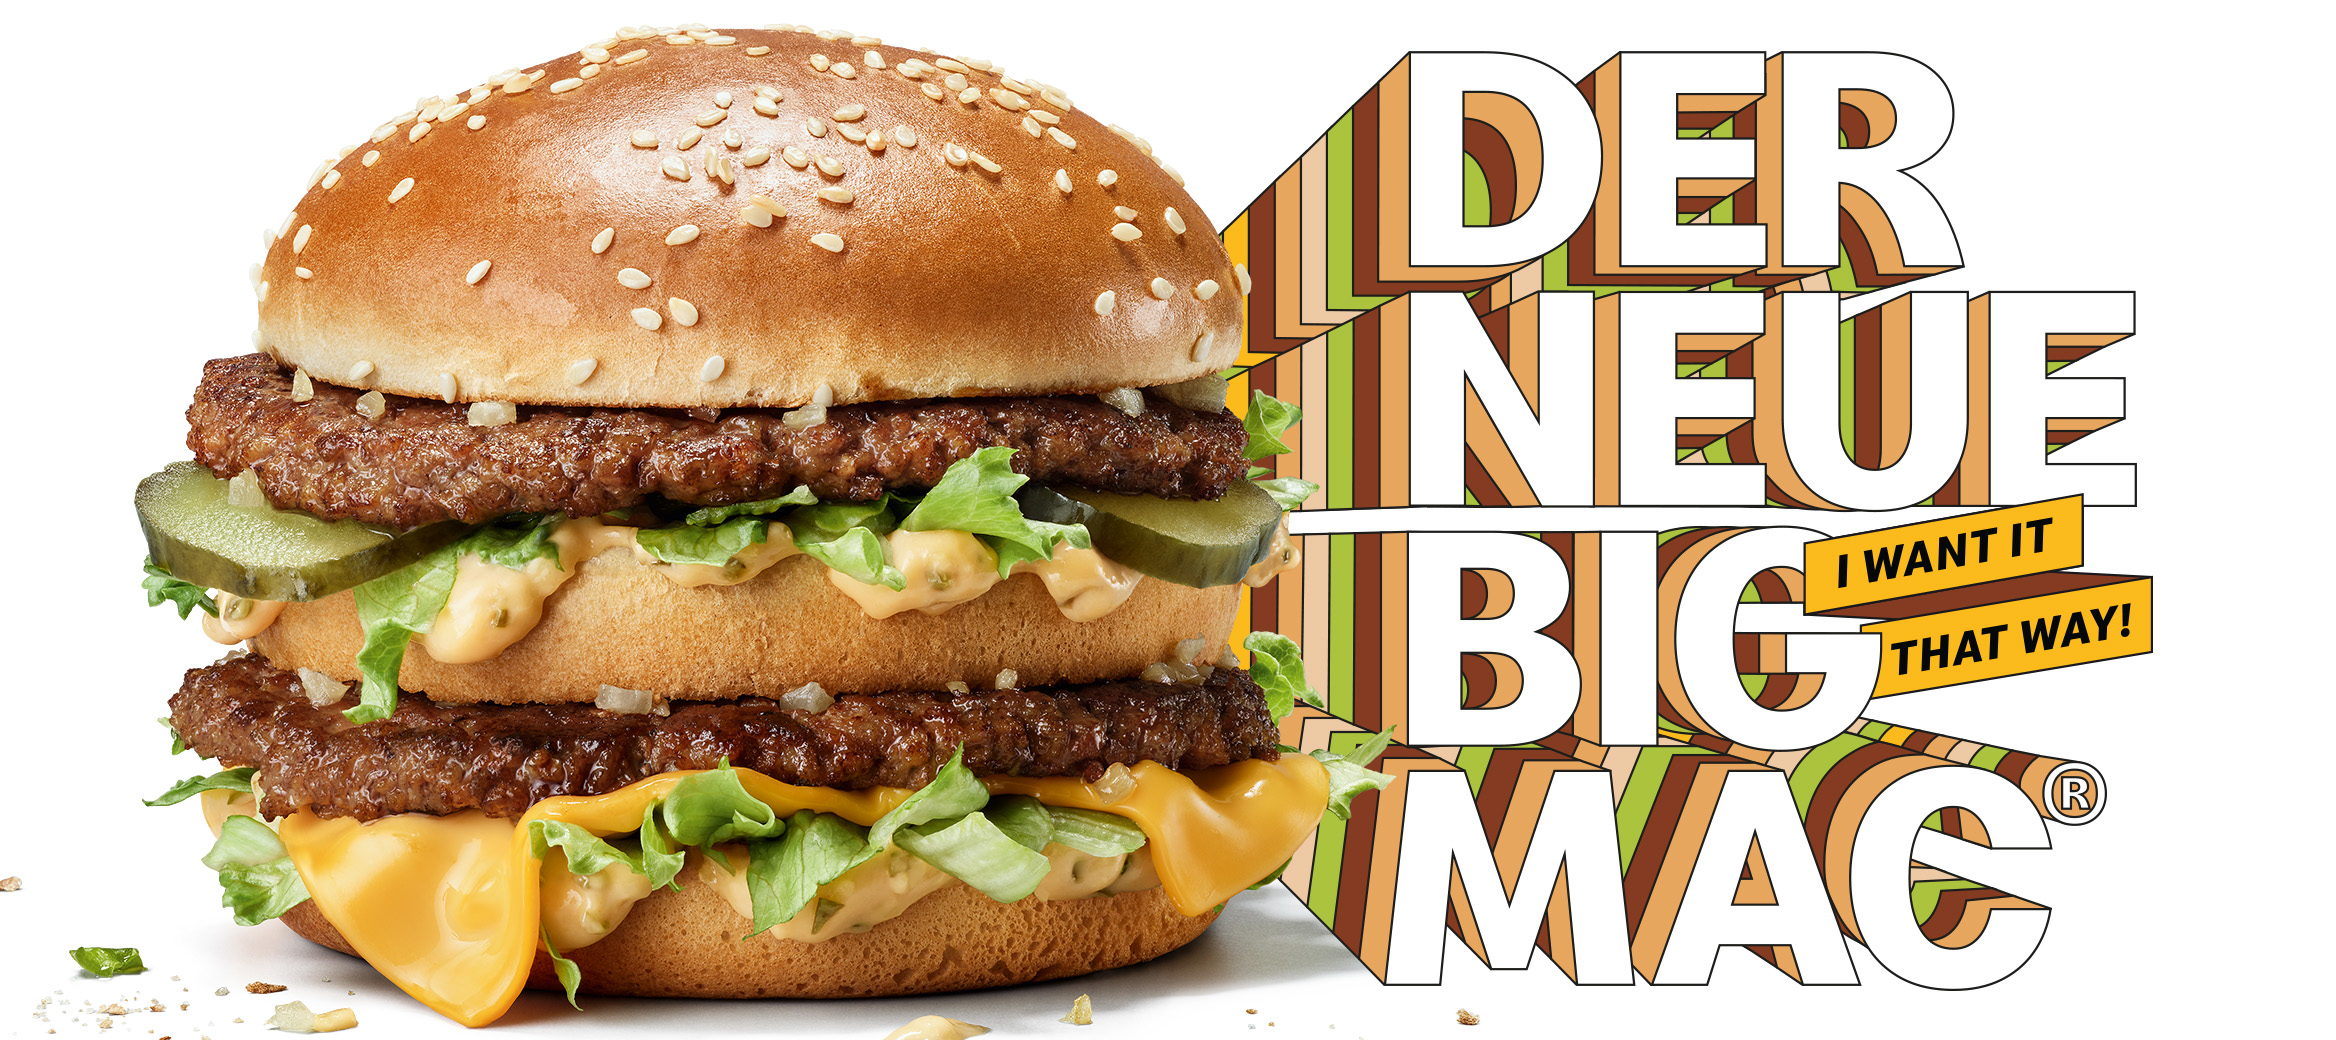 Der neue Big Mac® - I want it that way!